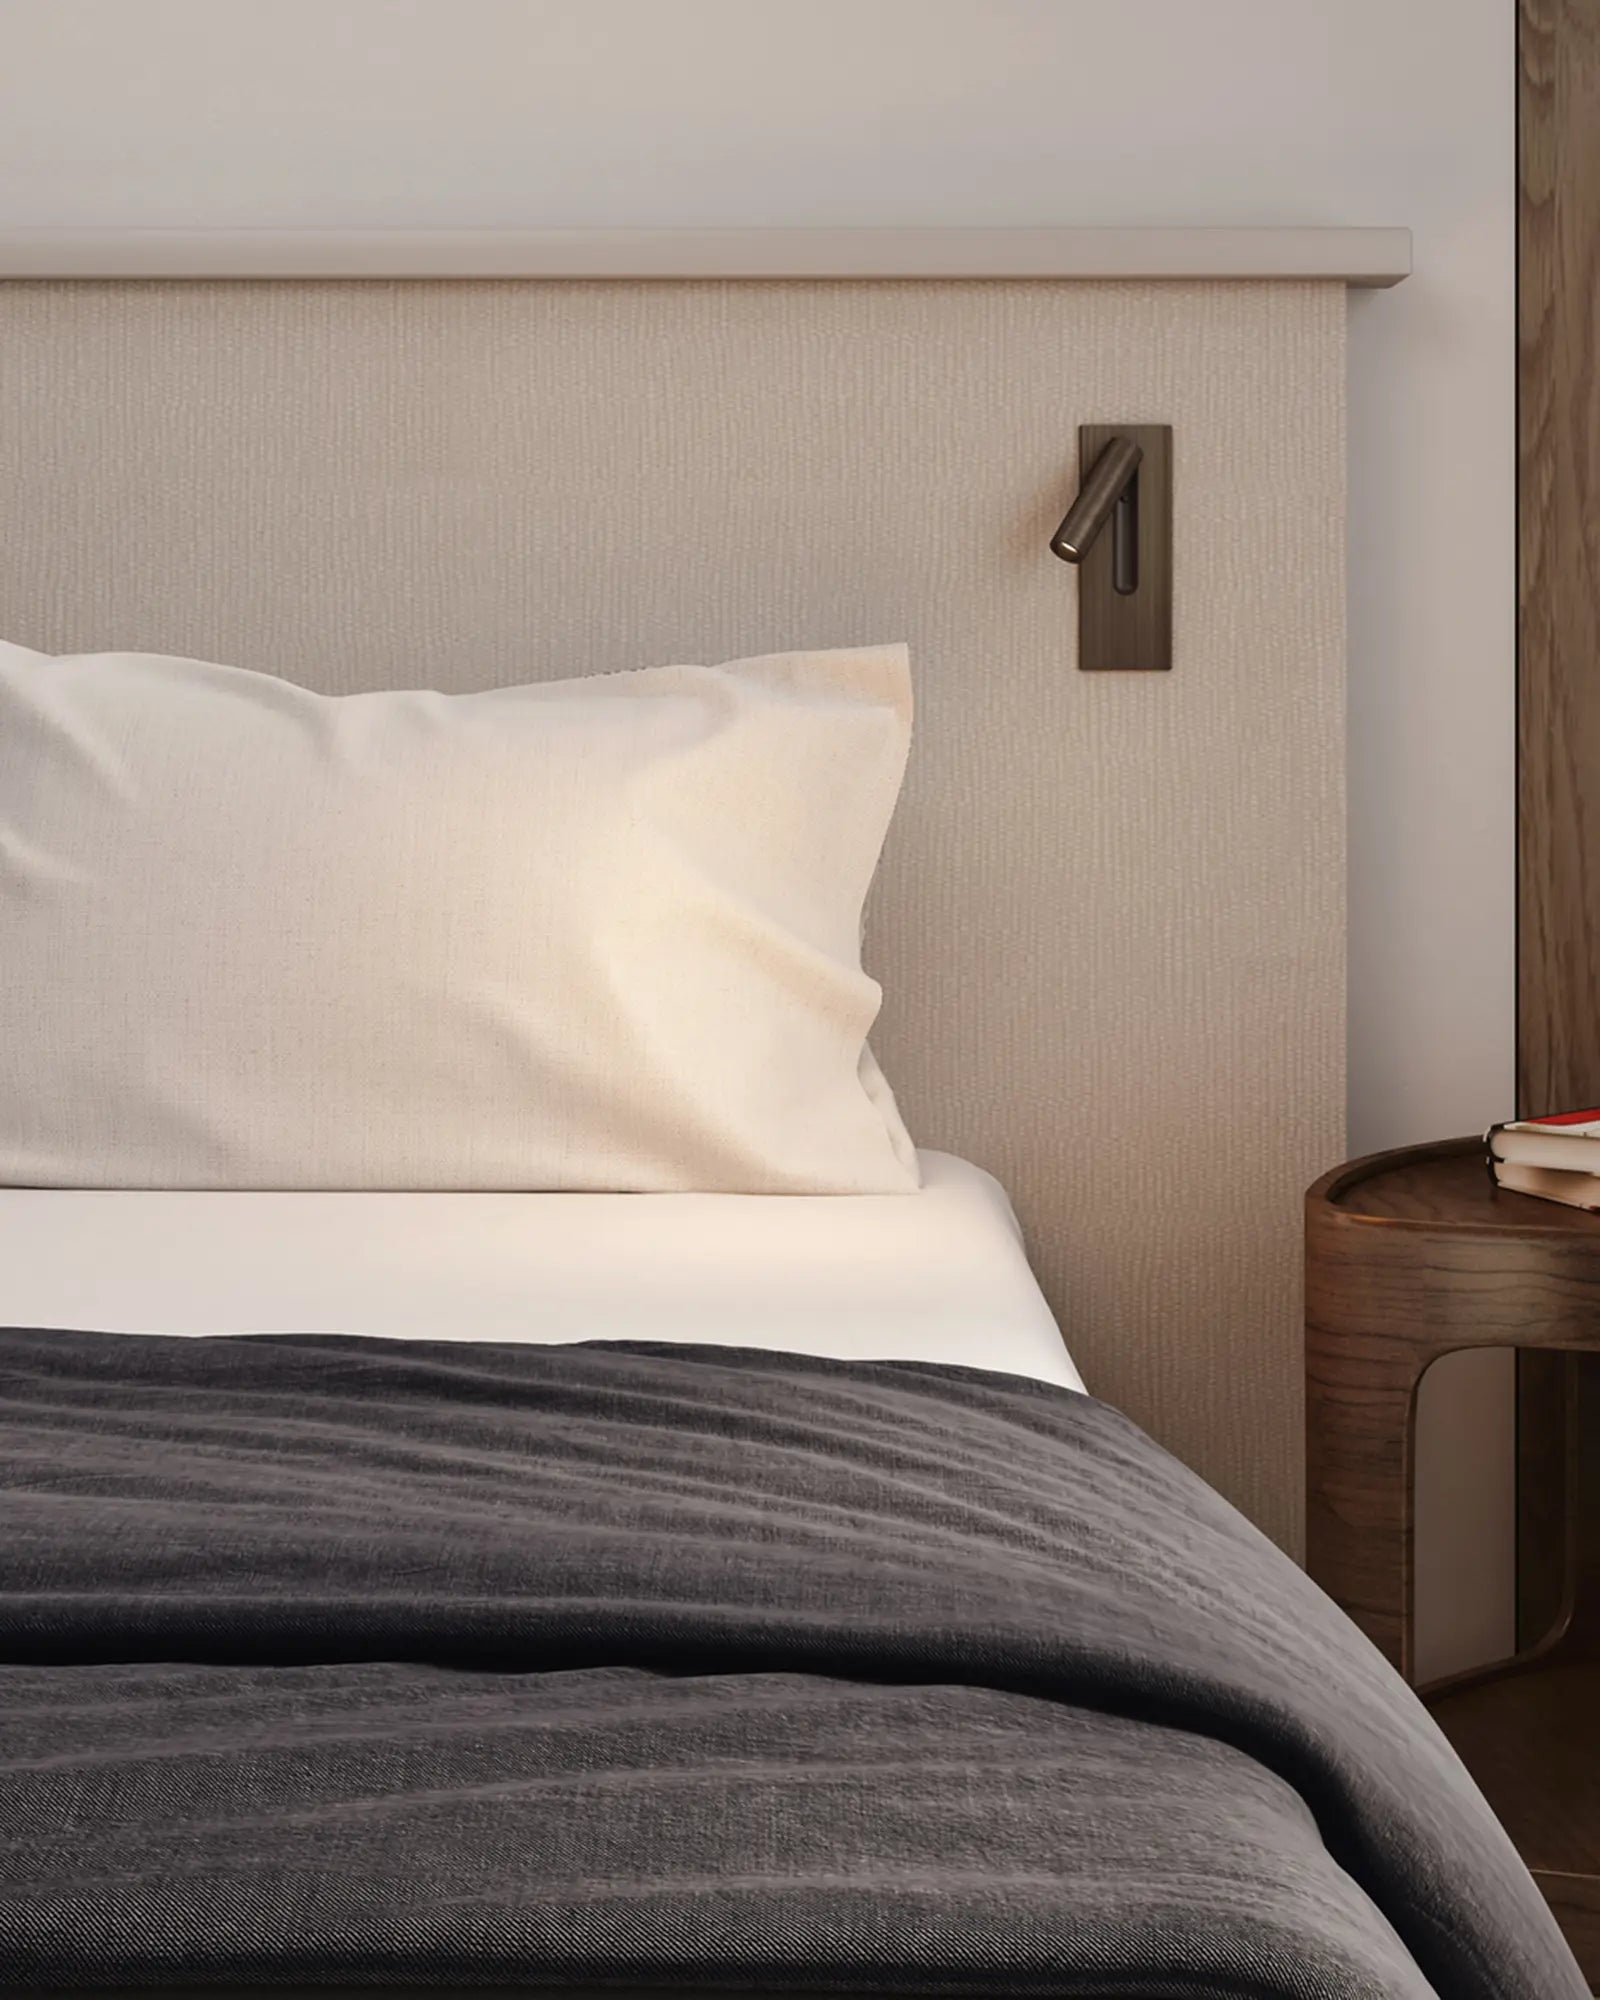 Fuse modern foldable minimal wall light bedhead